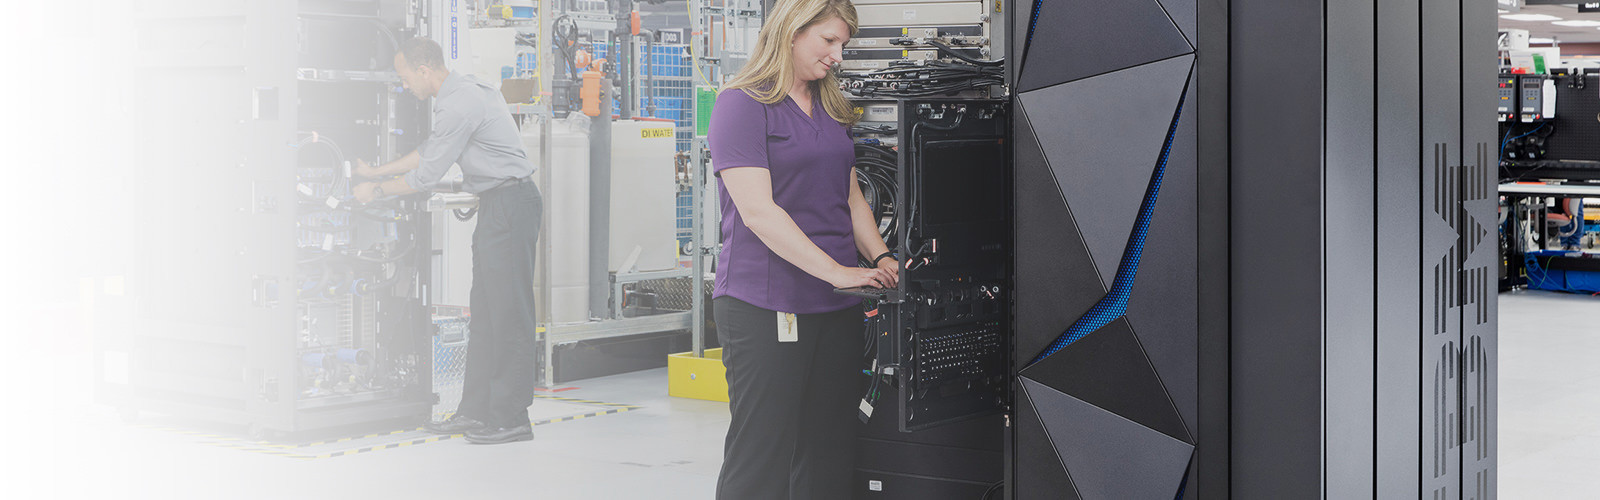 Woman working on IBM server